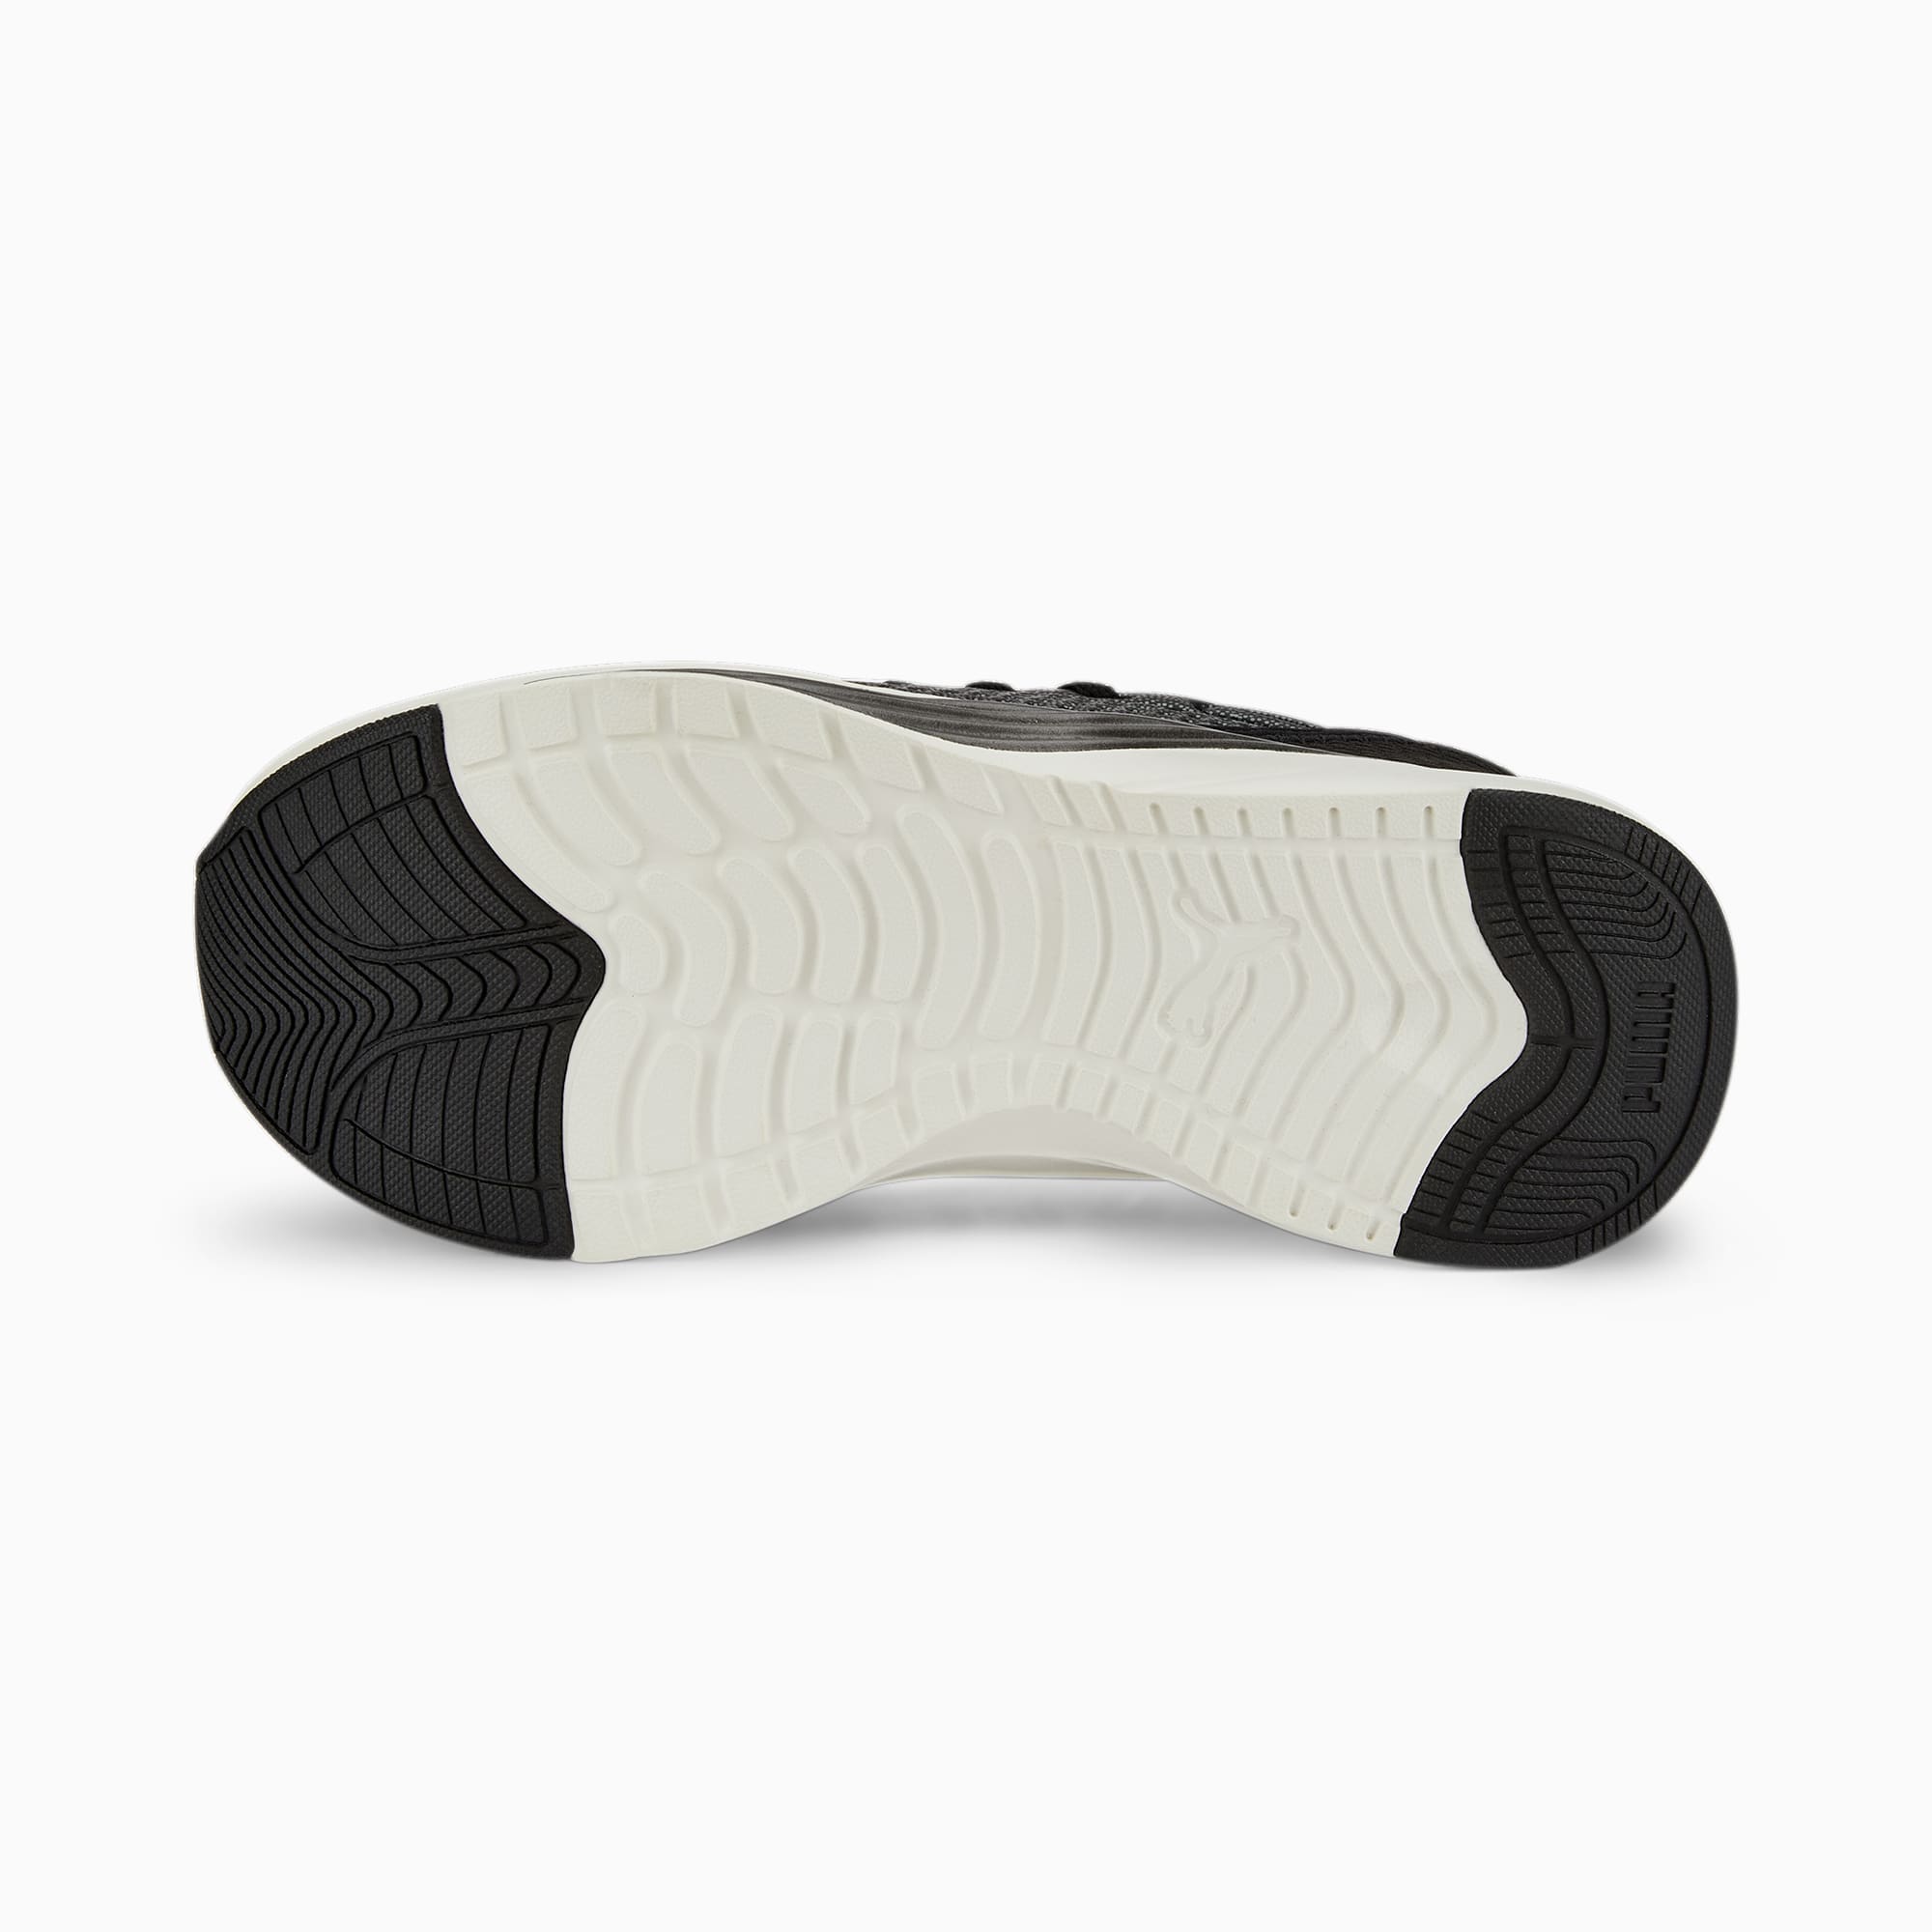 PUMA Softride Sophia 2 Elektro Running Shoes Women Sneakers, Black/Warm White, Size 35,5, Shoes